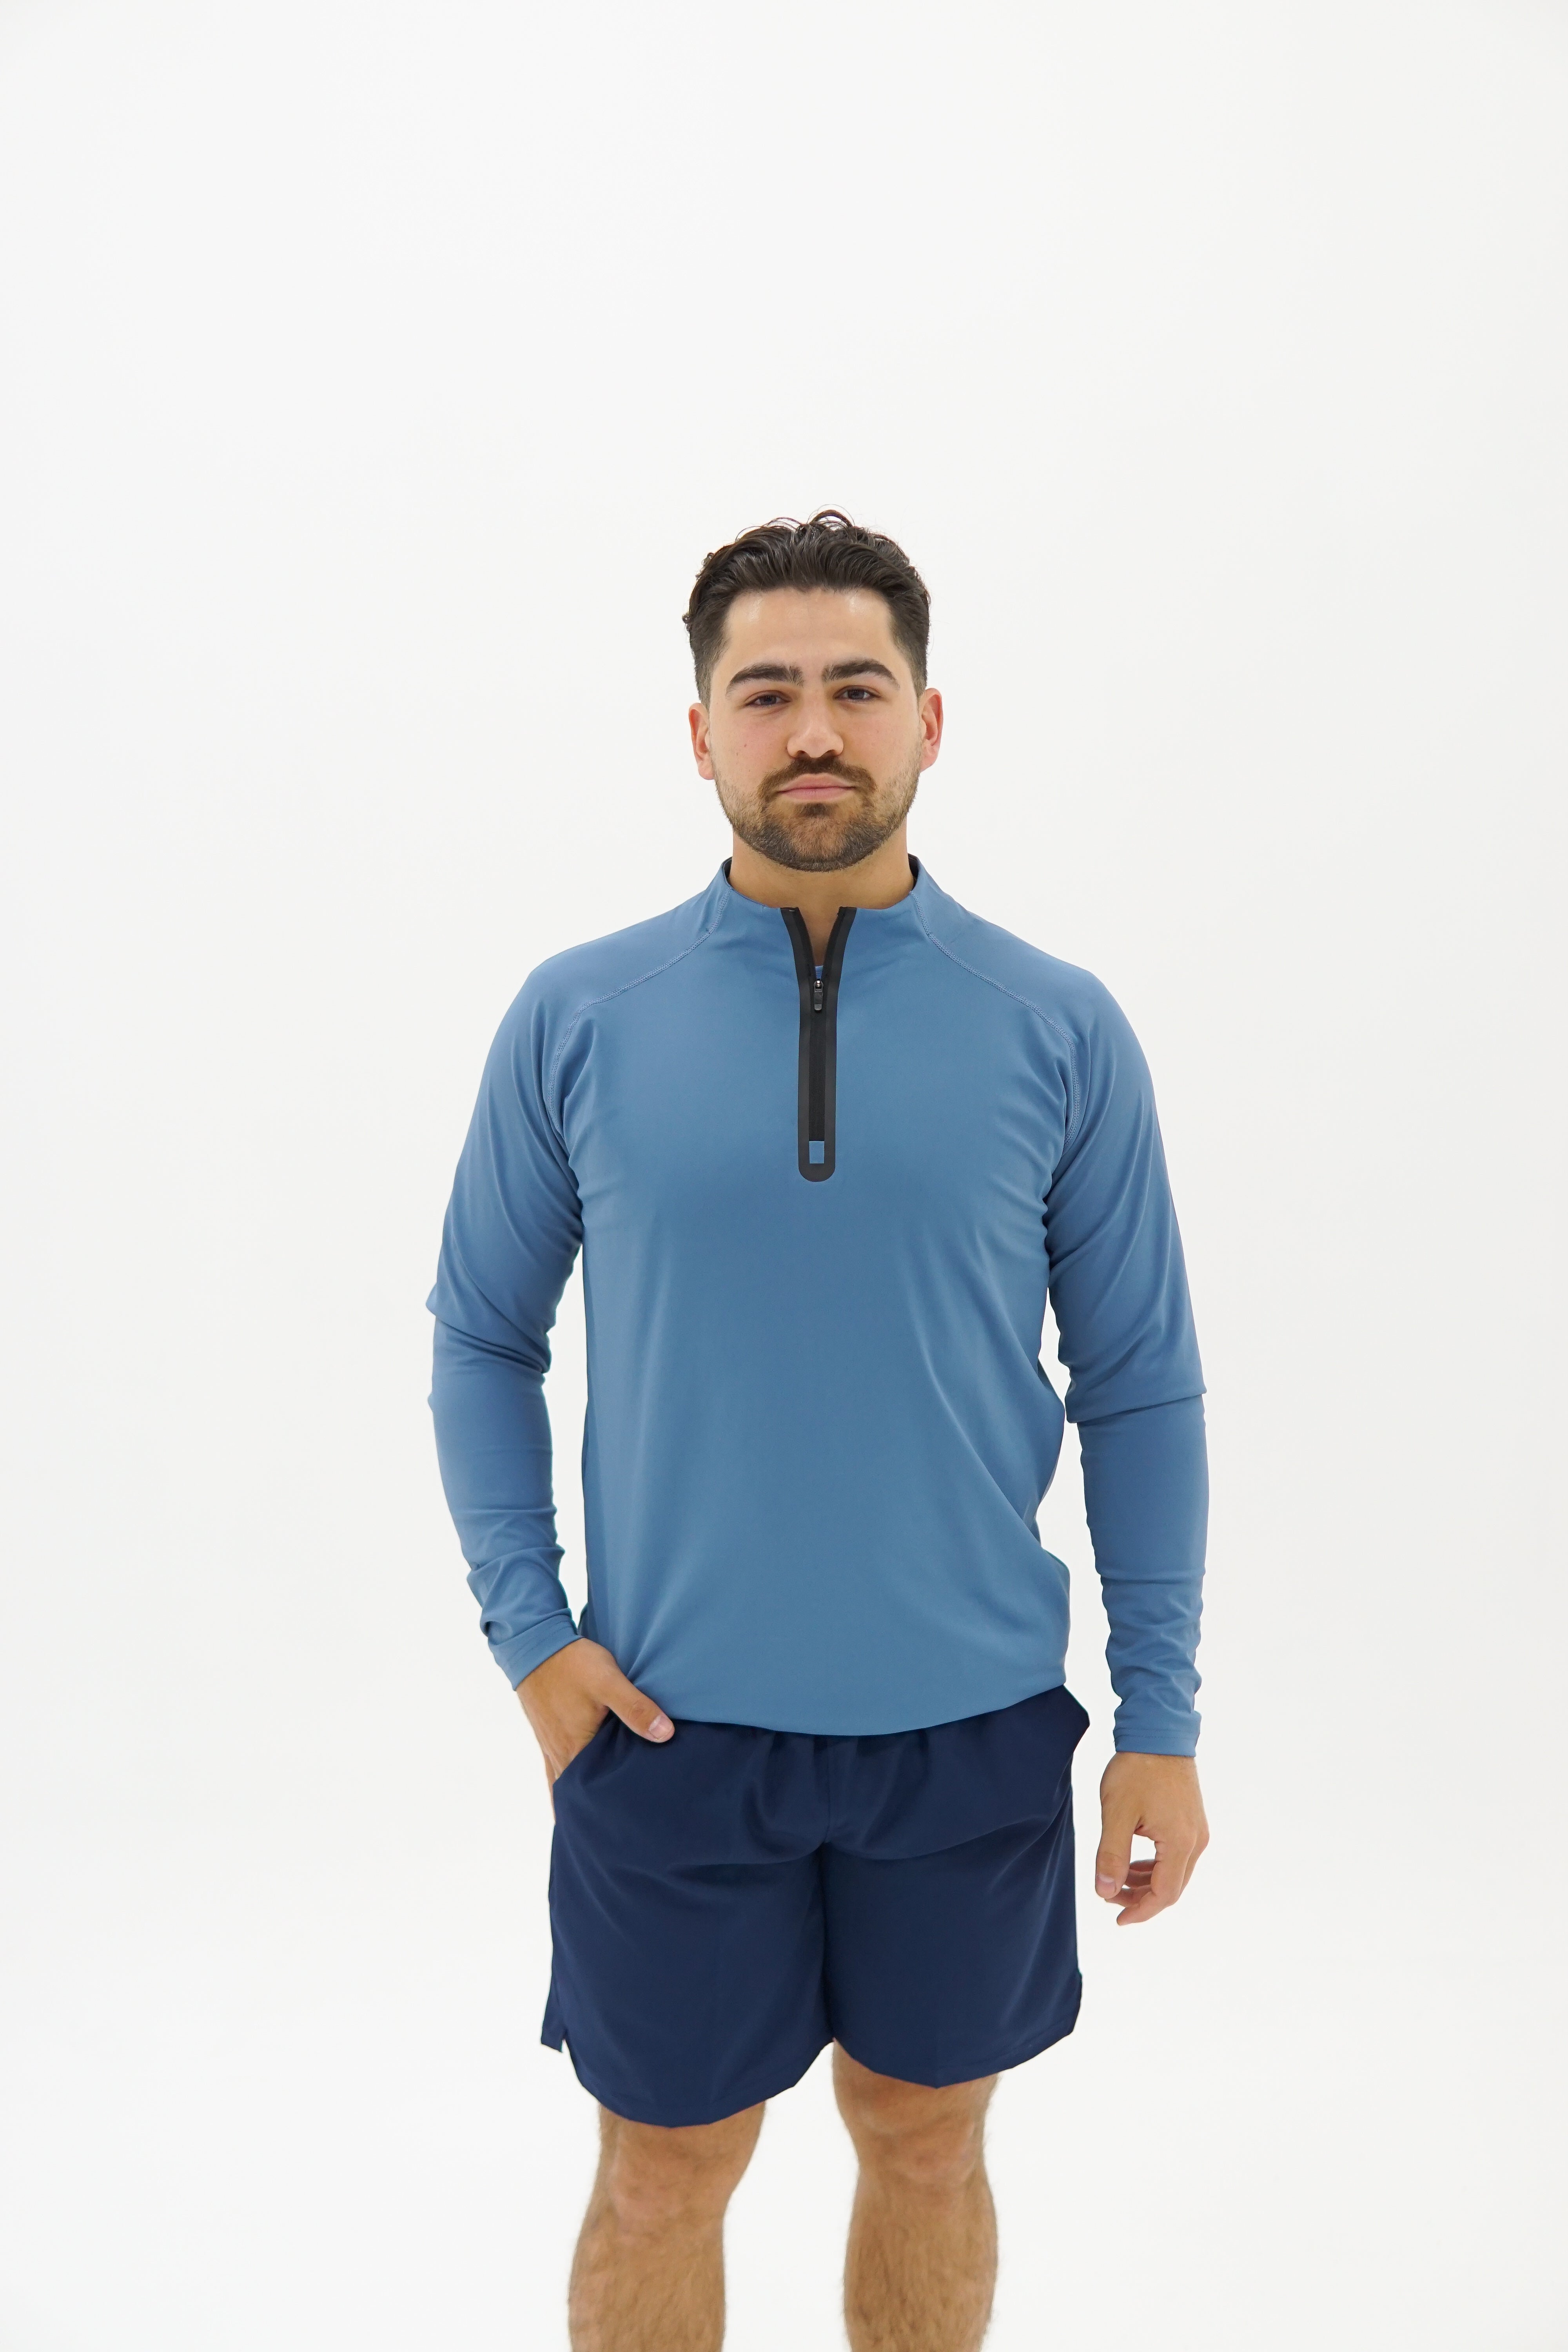 Sport Tech Performance Sweater - Azul Claro